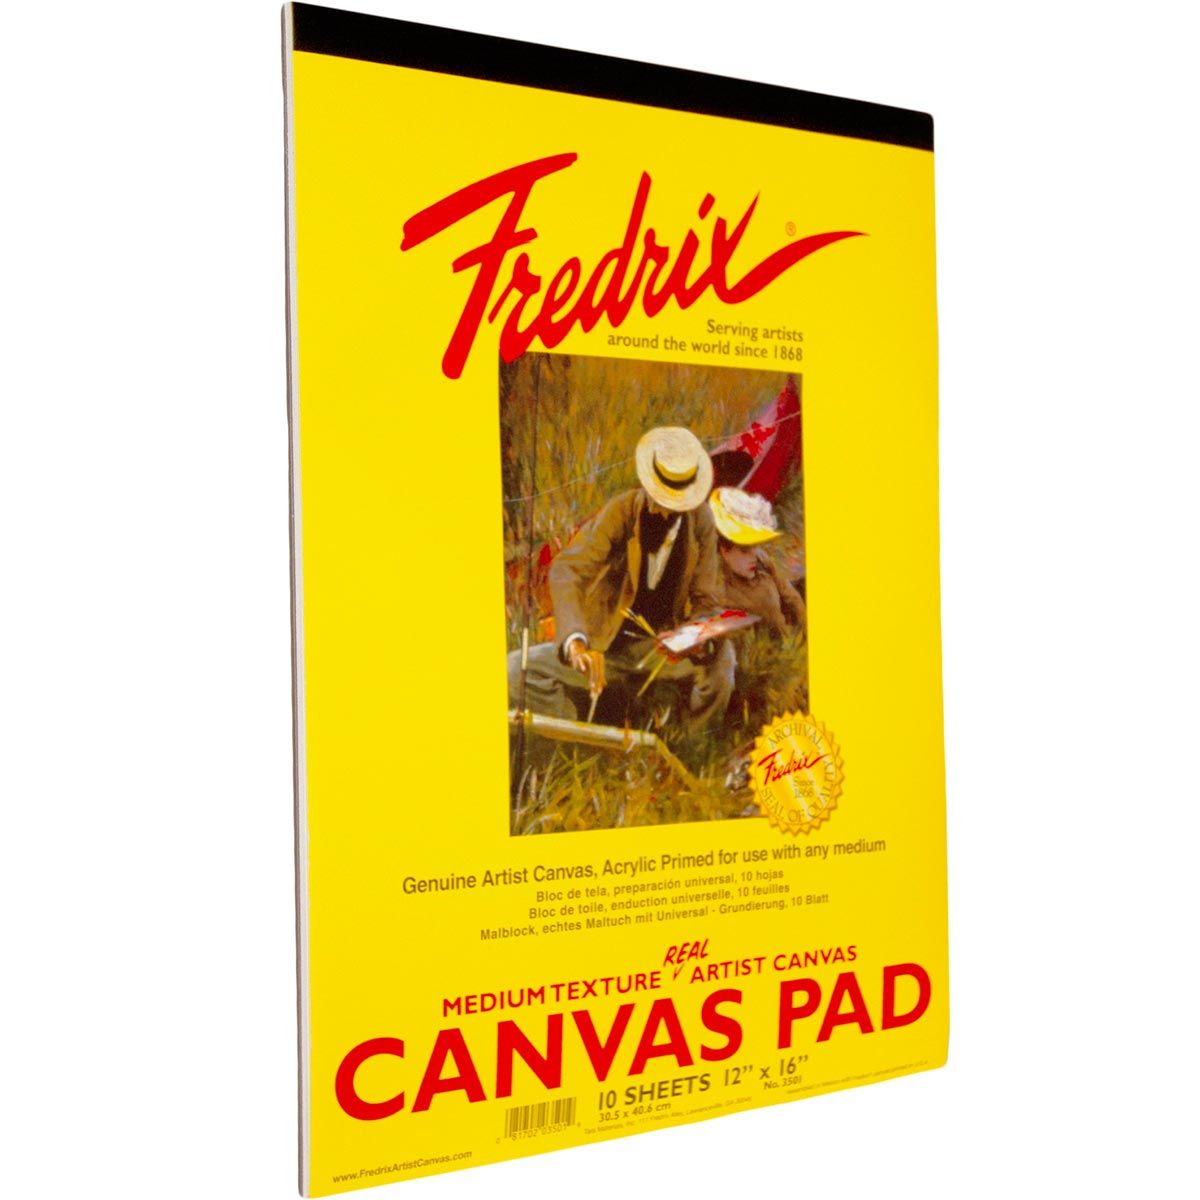 Fredrix White Canvas Pads 10 Sheets, 12" x 16"